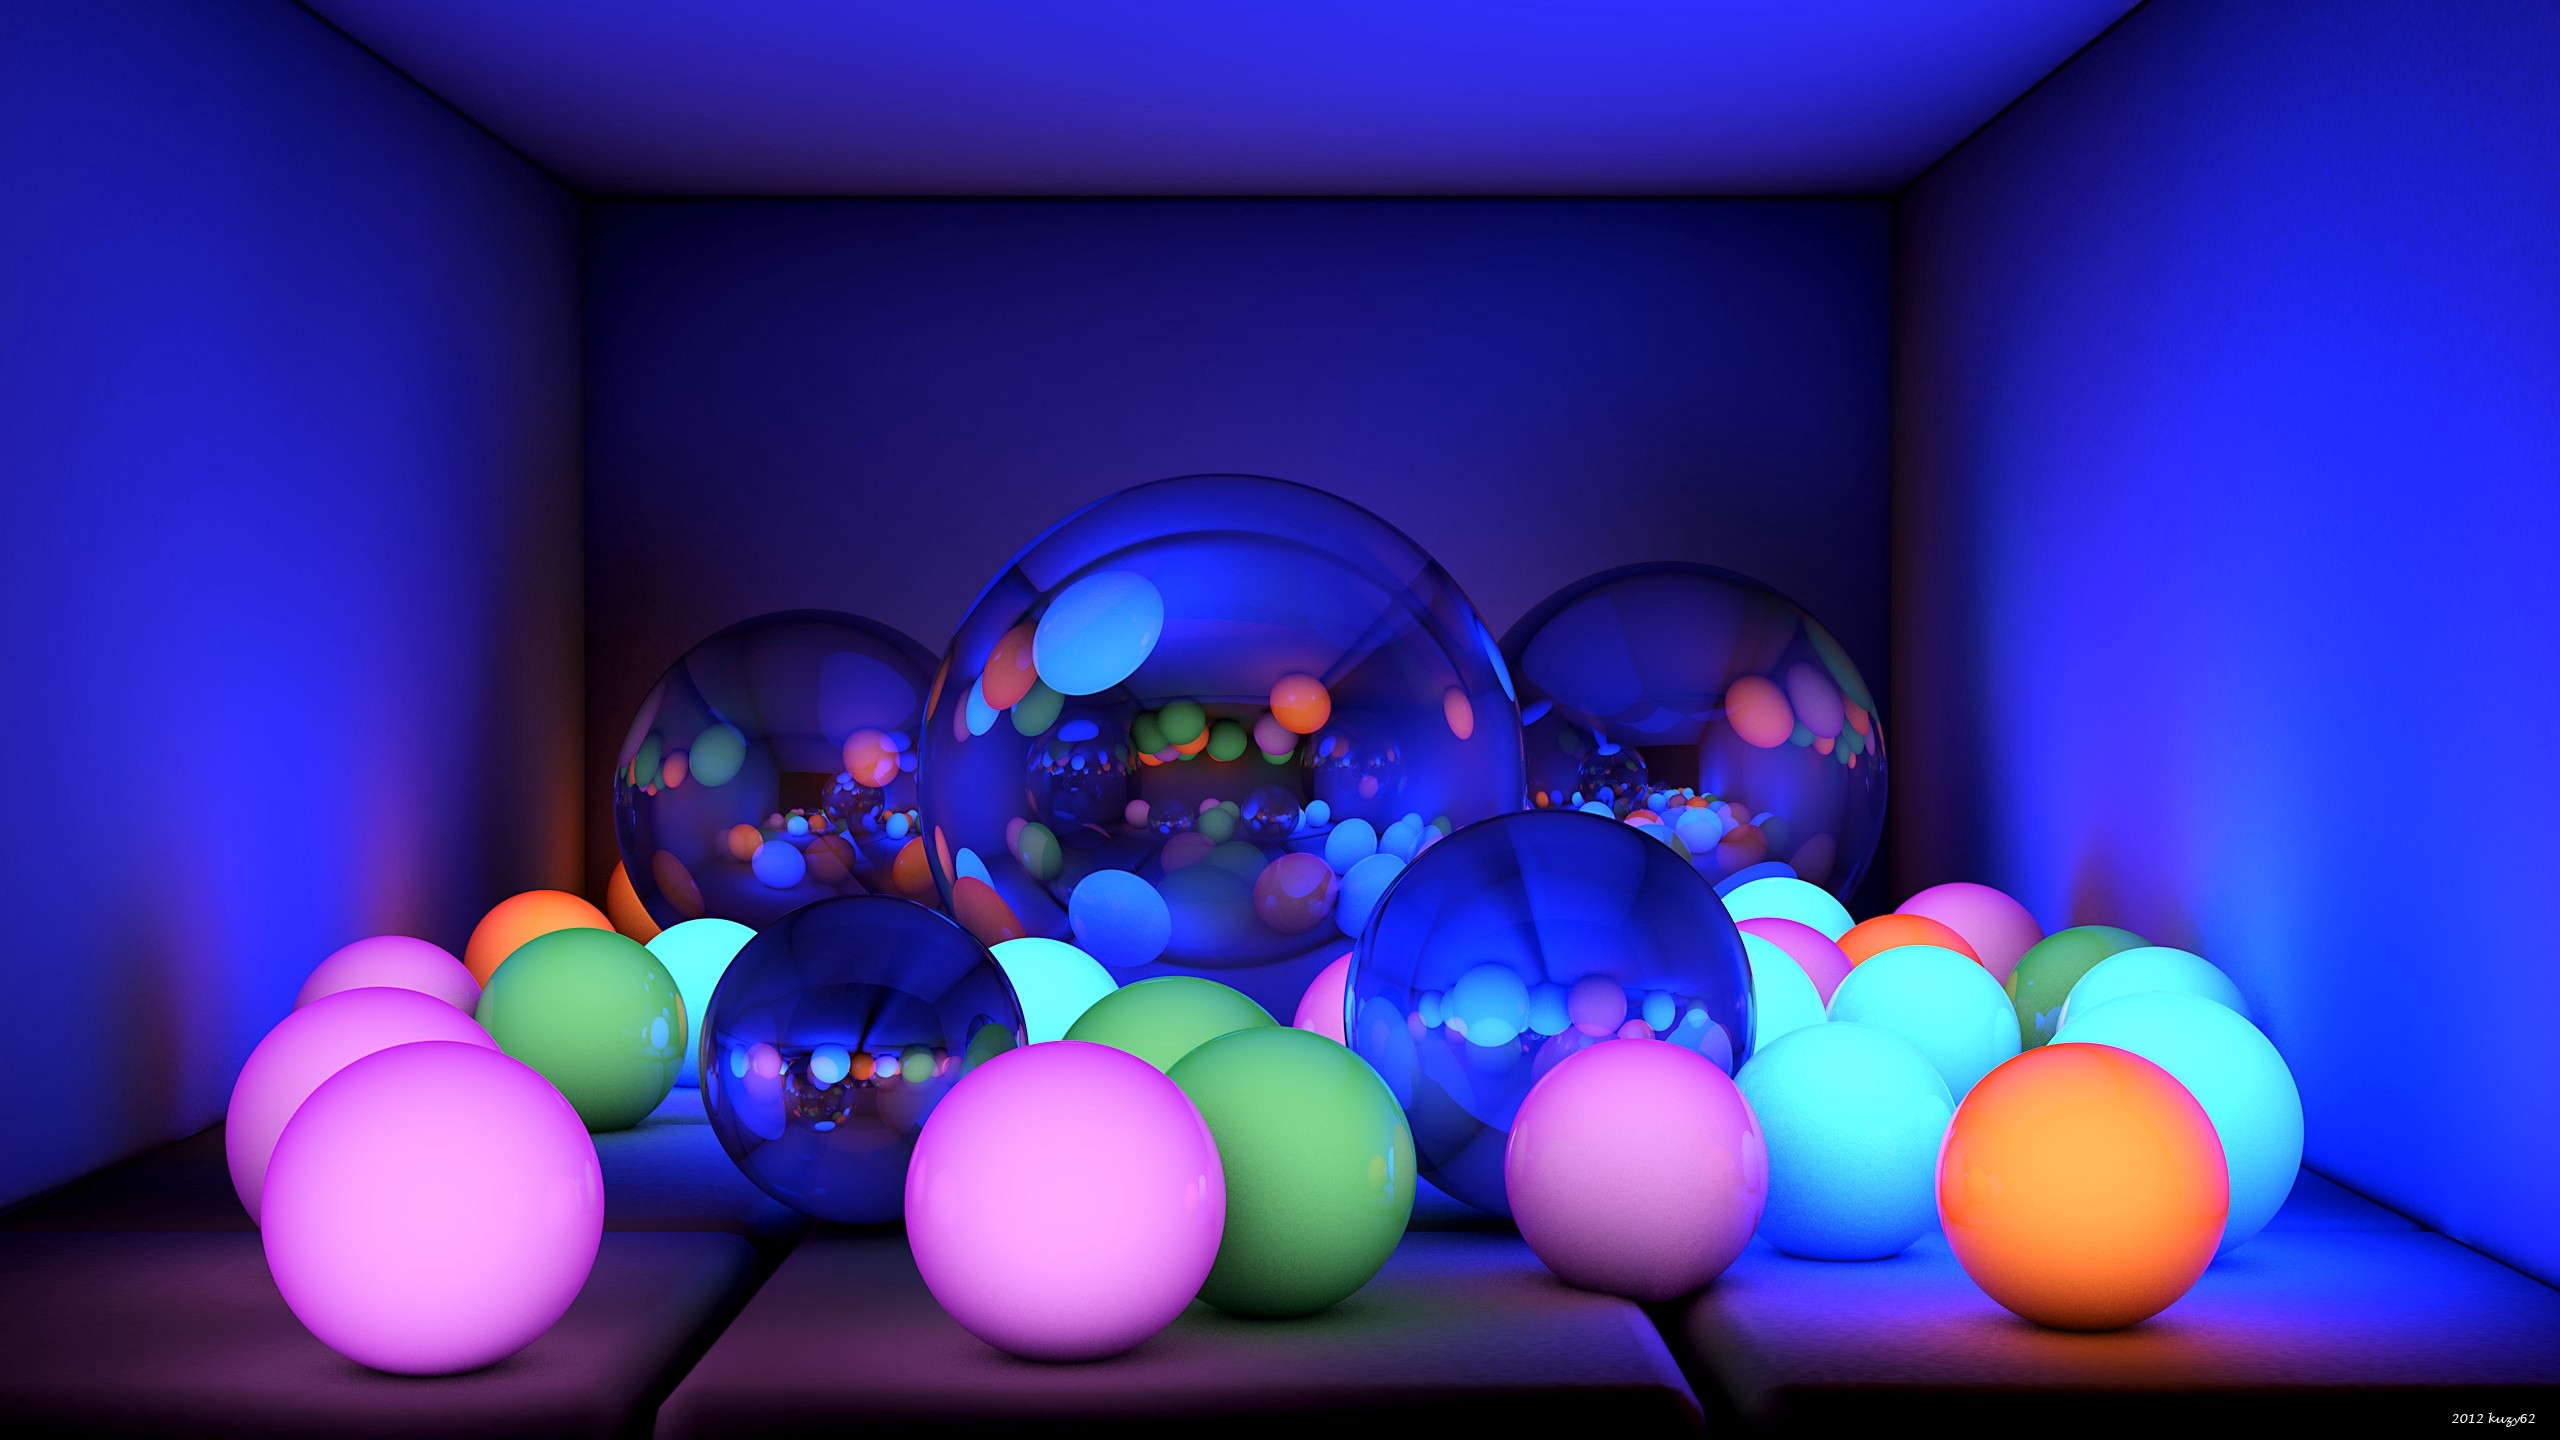 Wallpaper Balls Size Neon Glow Size 2560 X 1440 2560x1440 Wallpaper Teahub Io